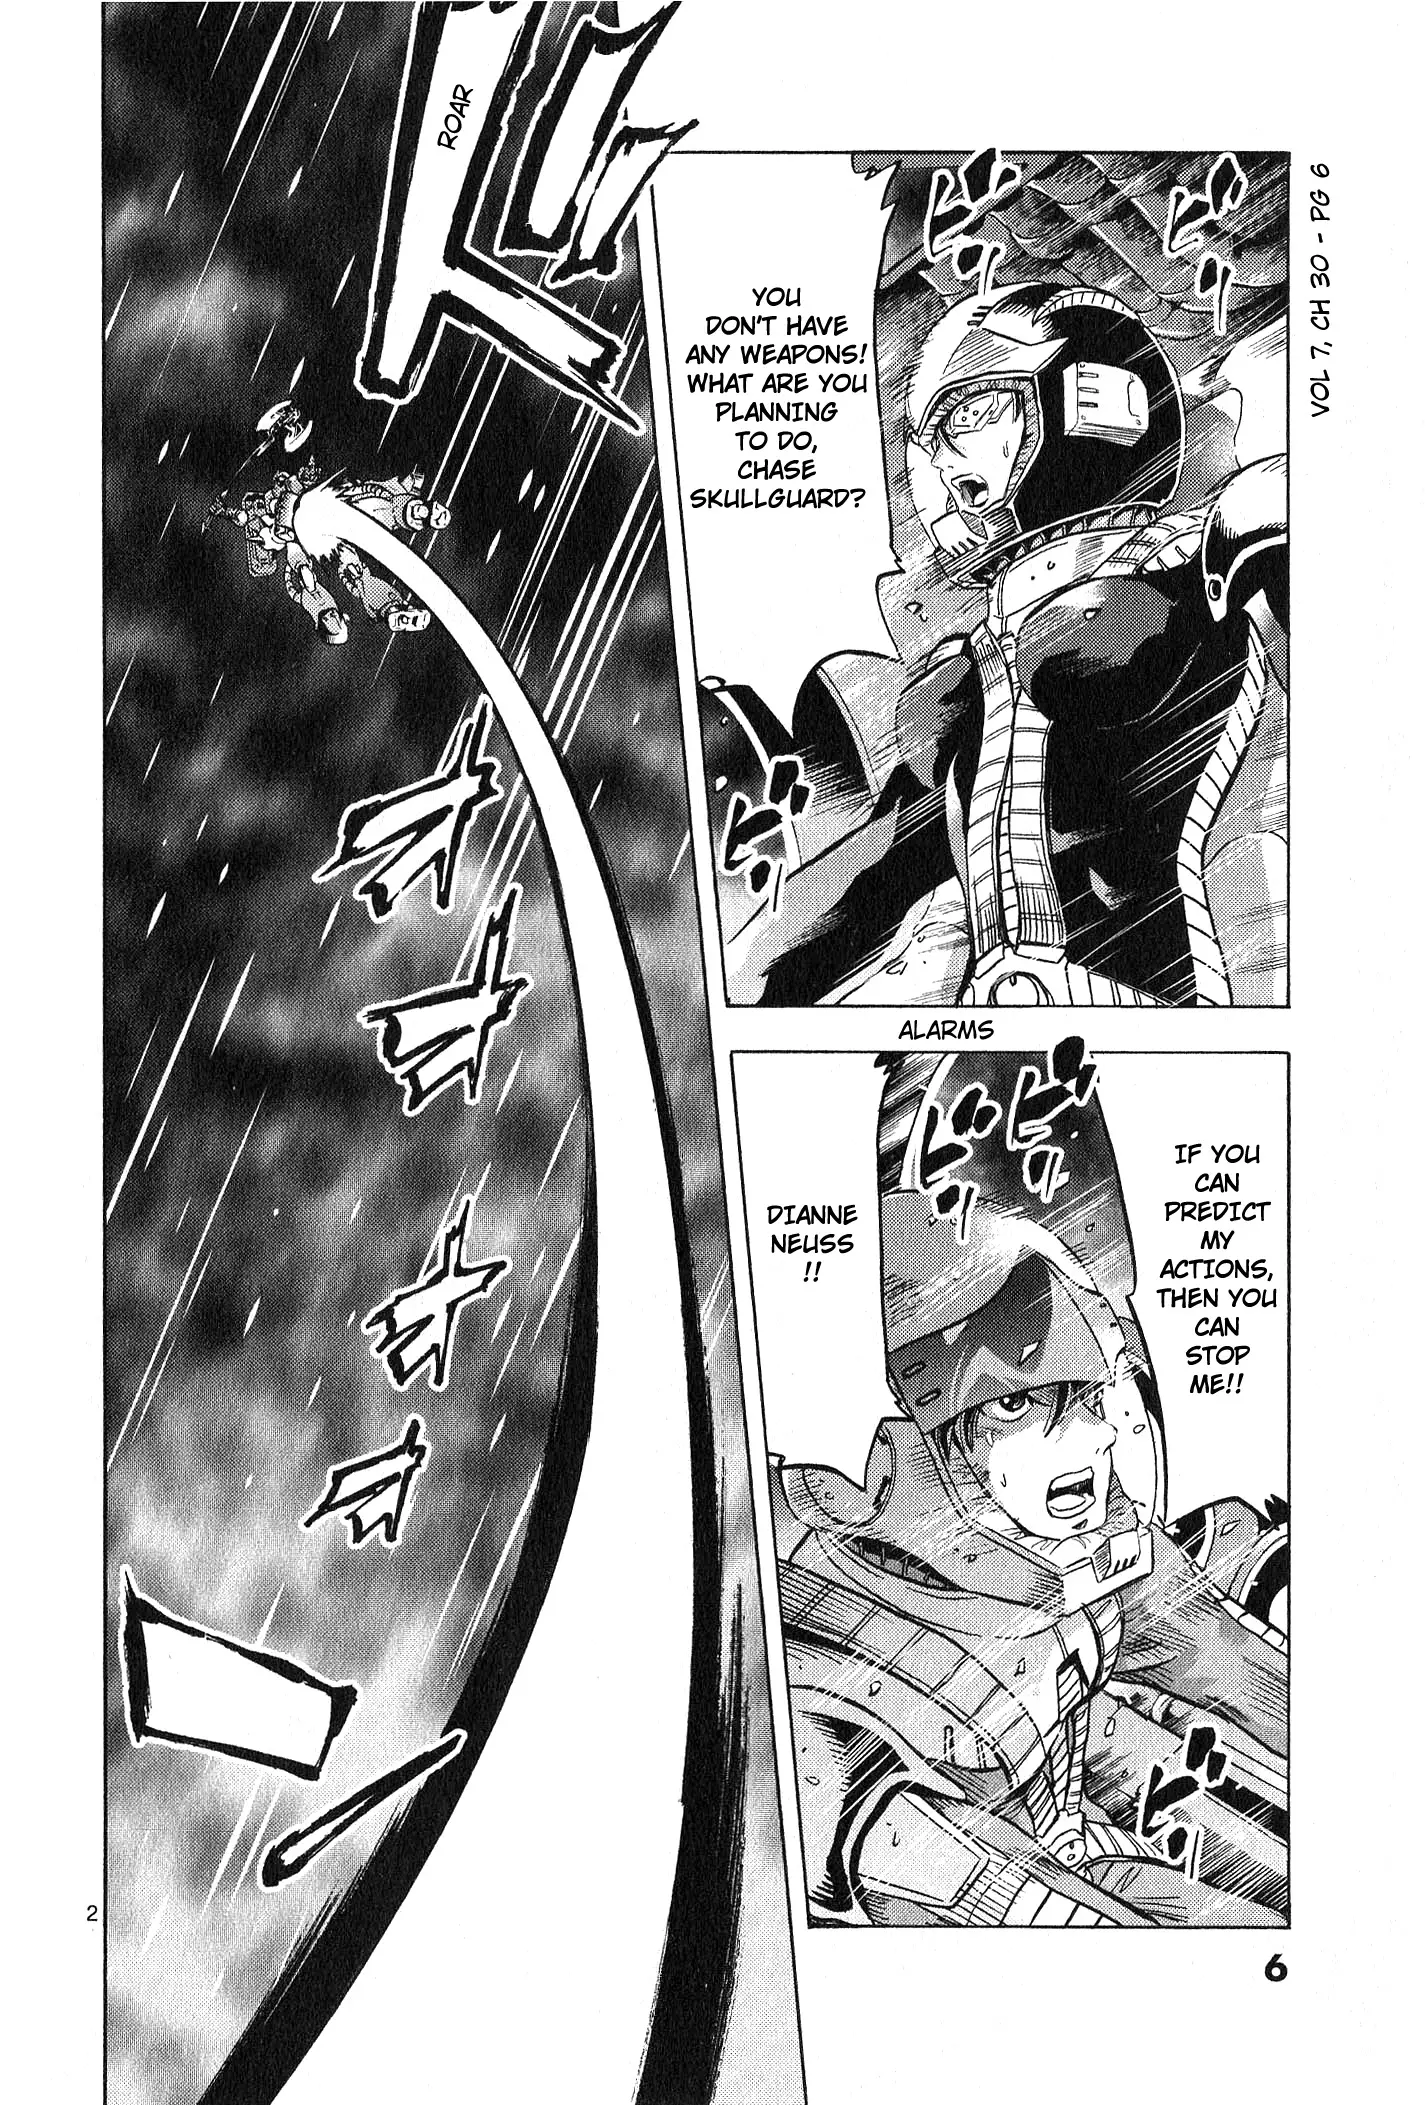 Mobile Suit Gundam Aggressor - 30 page 3-00278c26